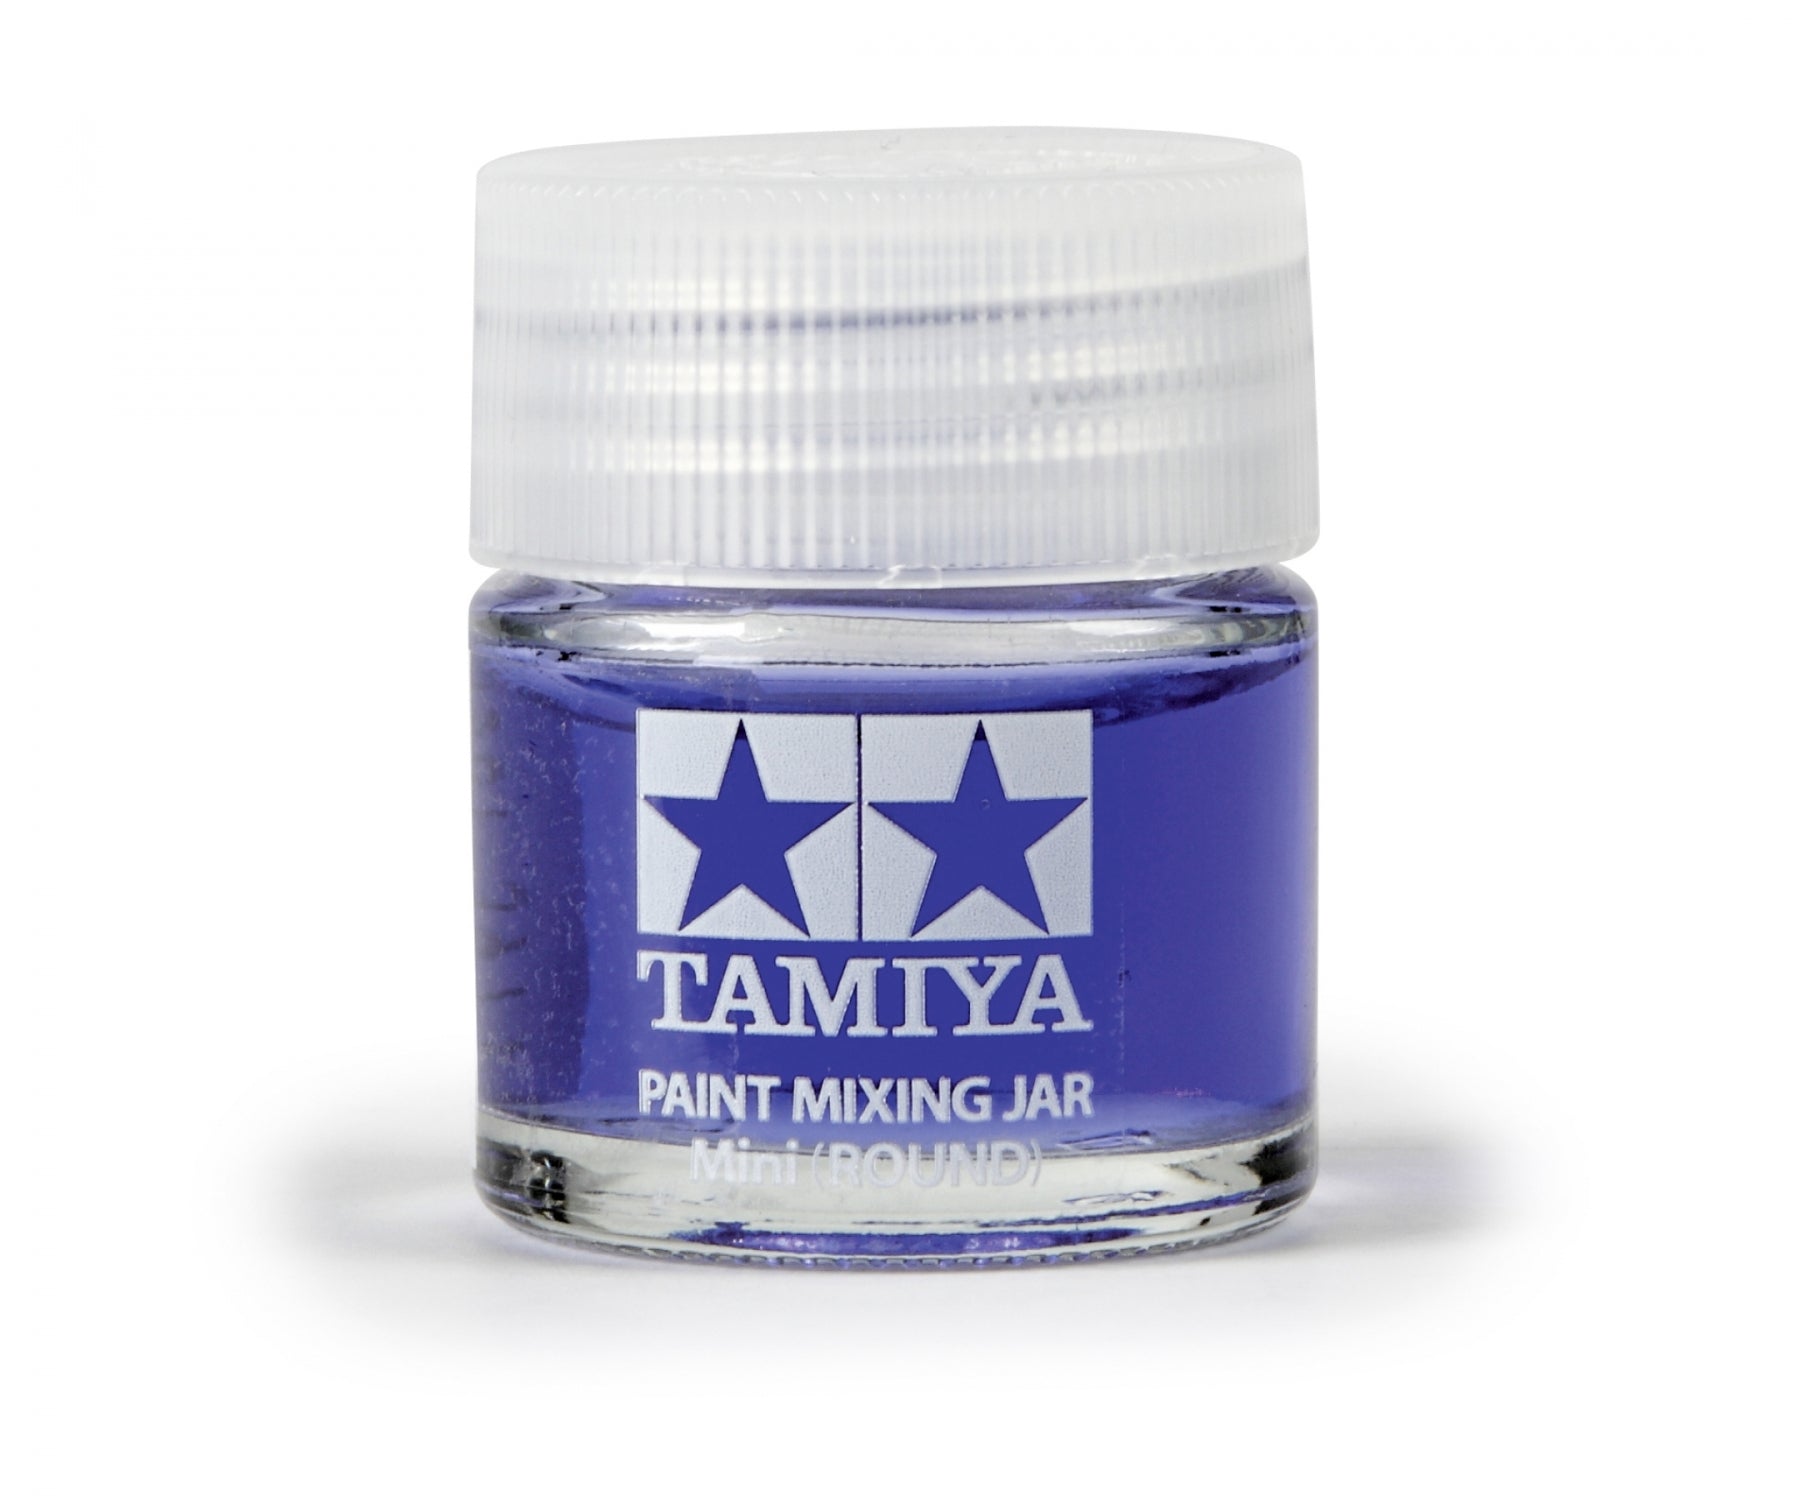 X20A Tamiya Thinner (10ml)